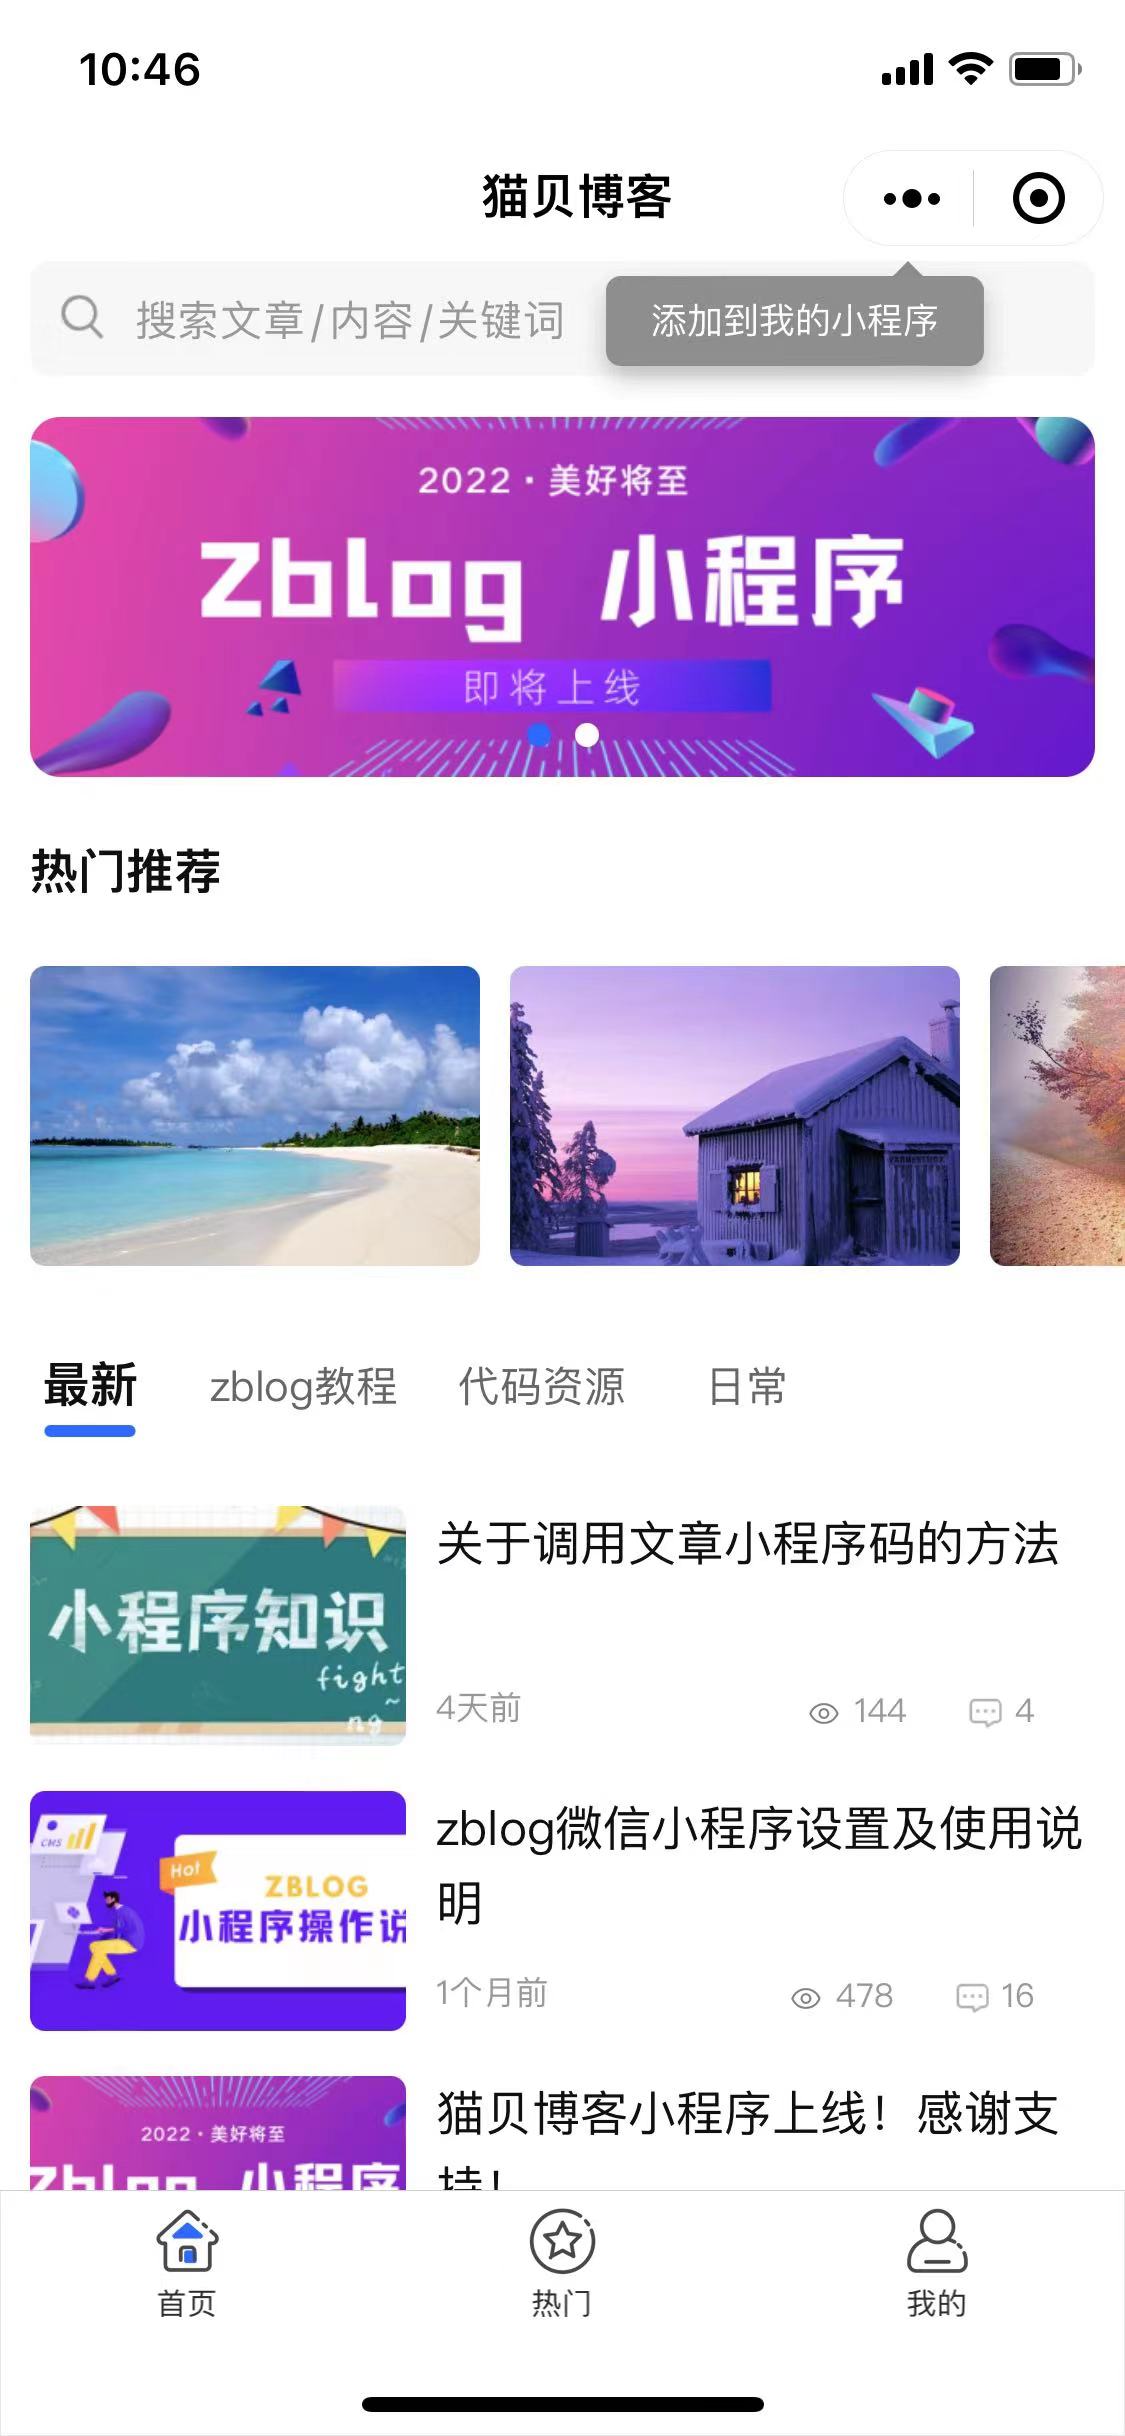 zblogphp微信小(xiǎo)程序